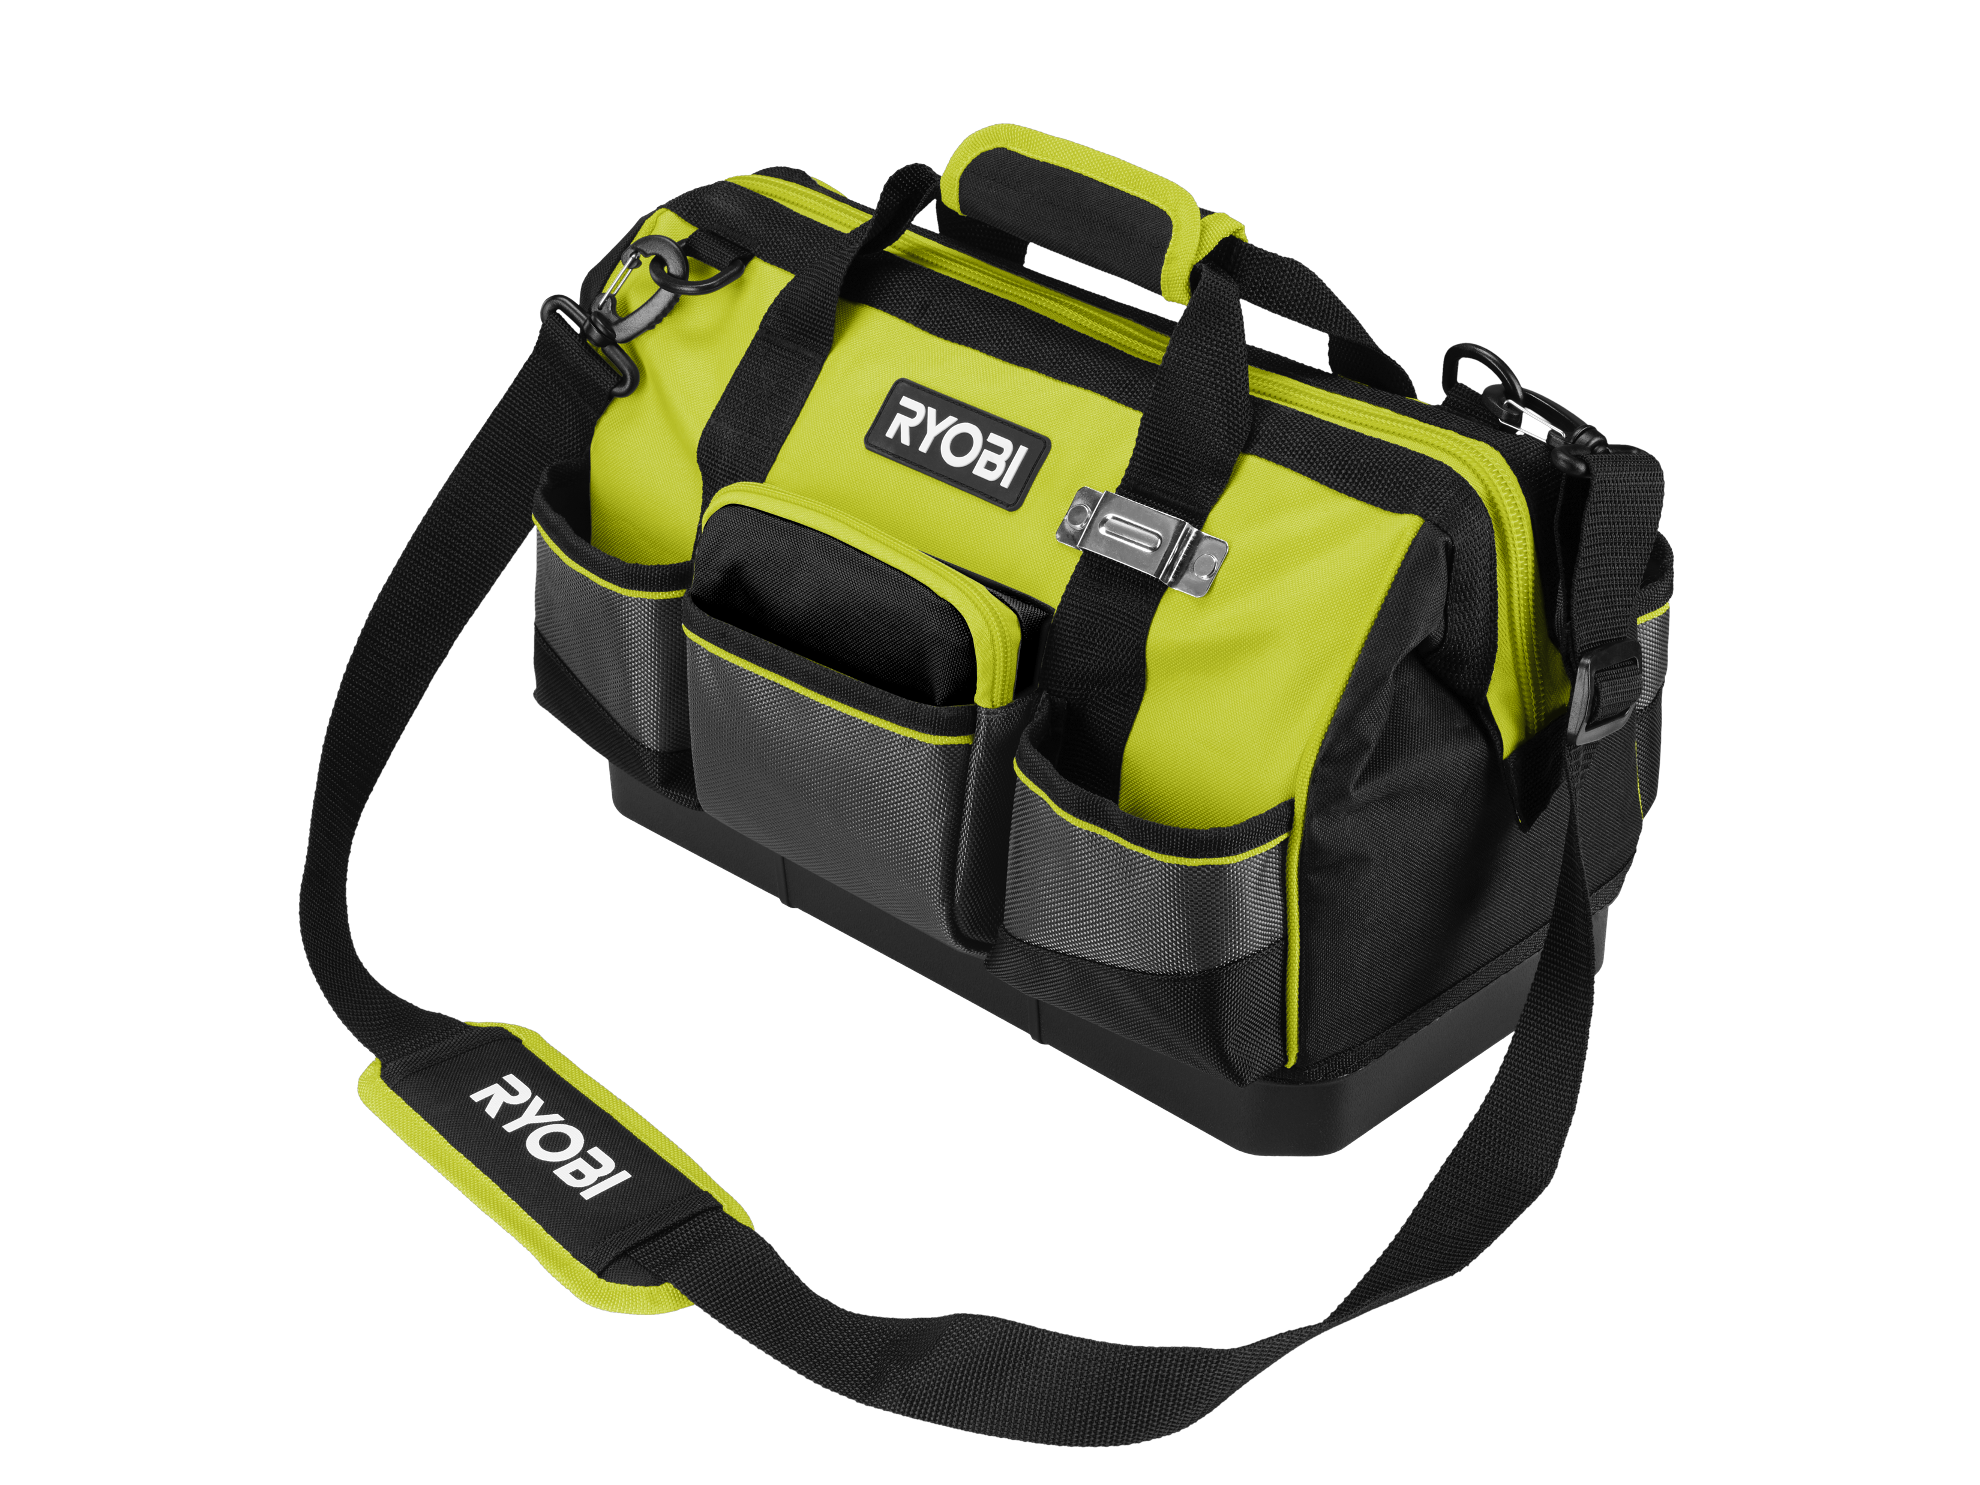 16 Backpack with Tool Organizer - RYOBI Tools